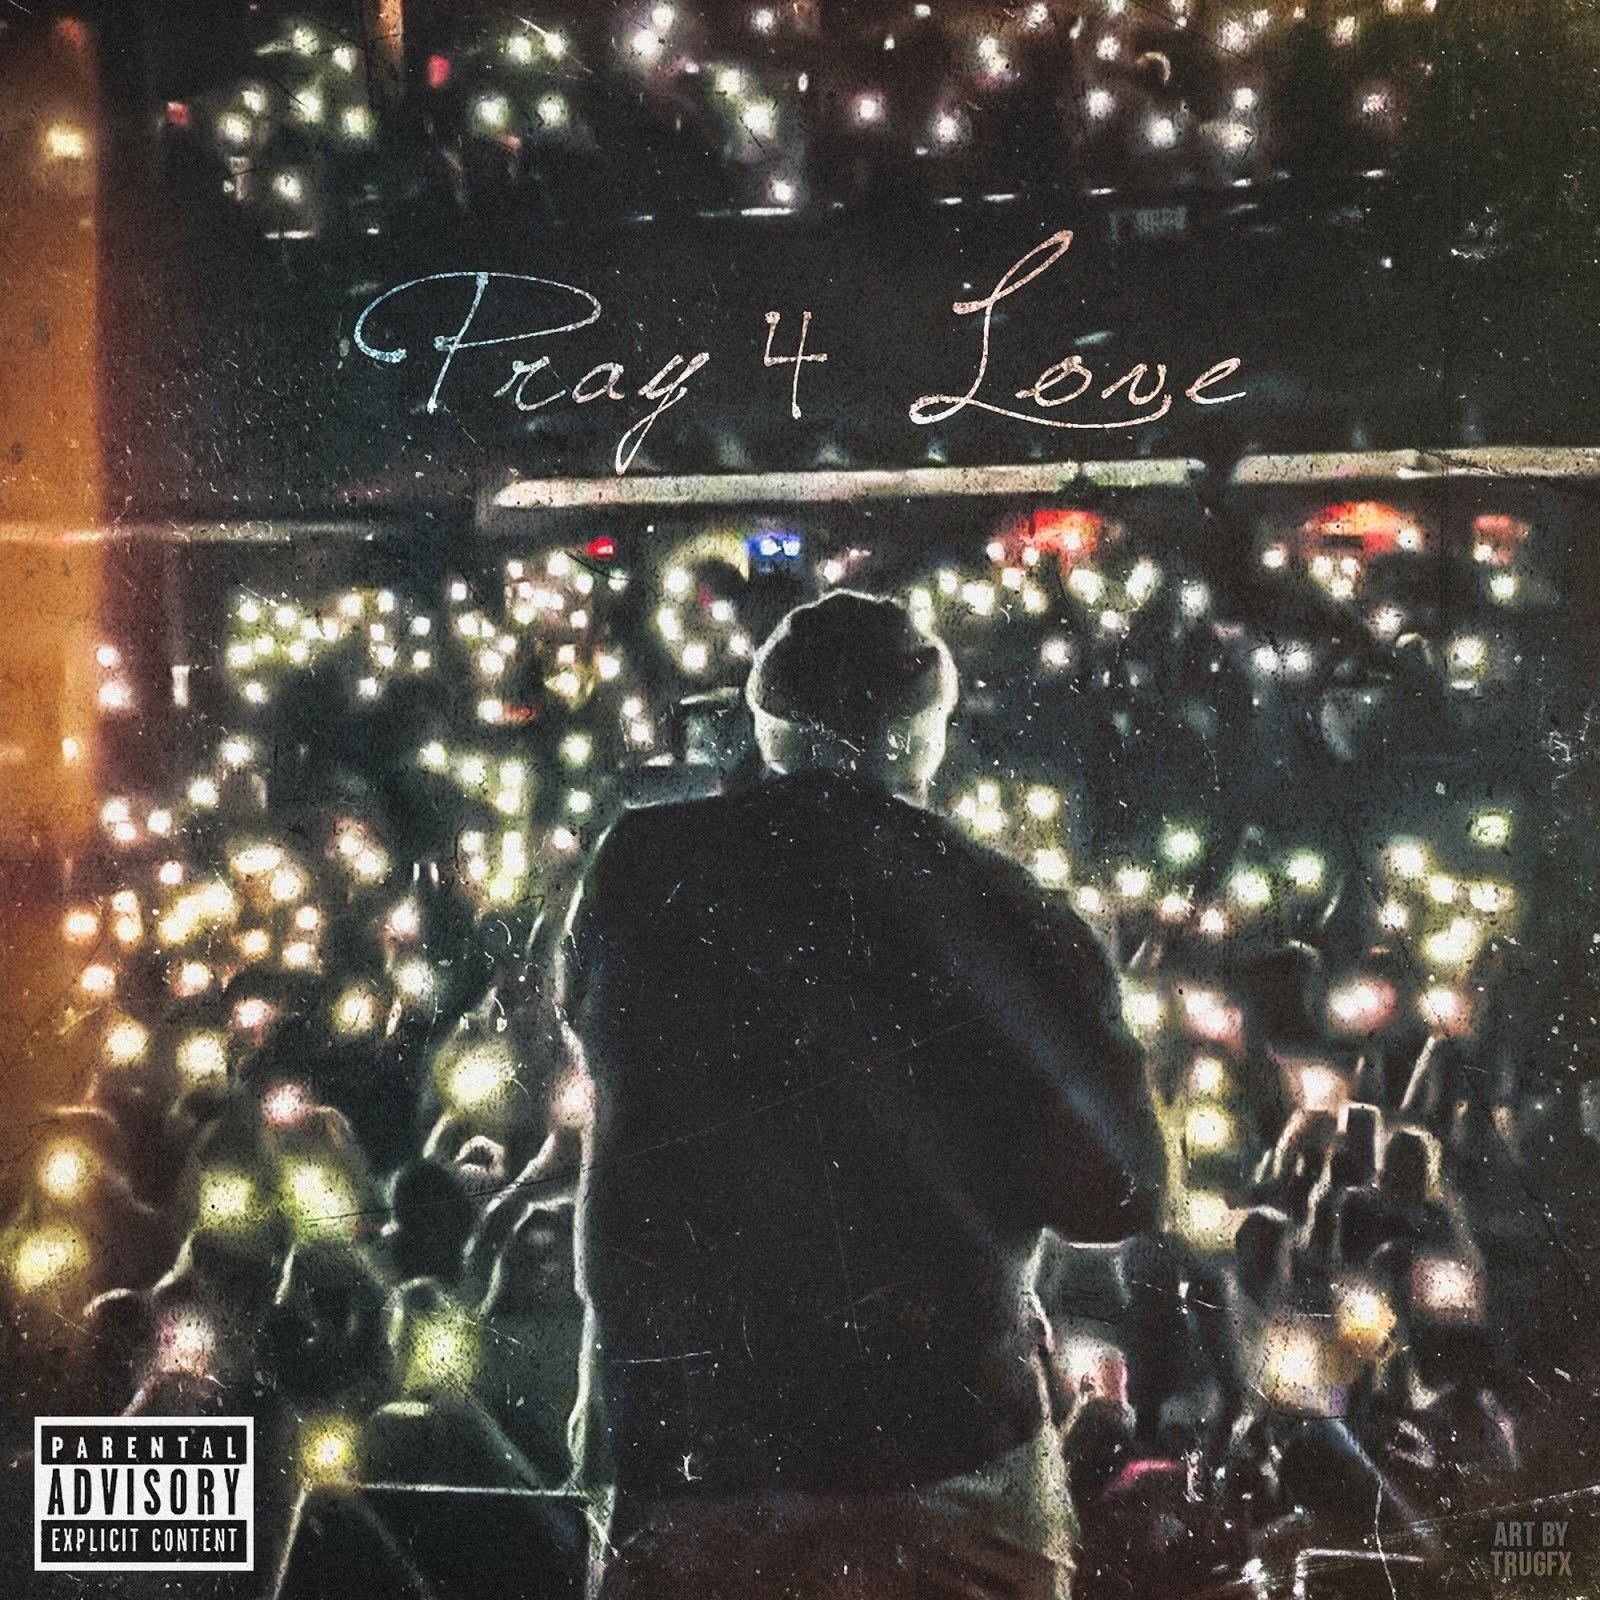 Rod Wave Shares 'Pray 4 Love' Album